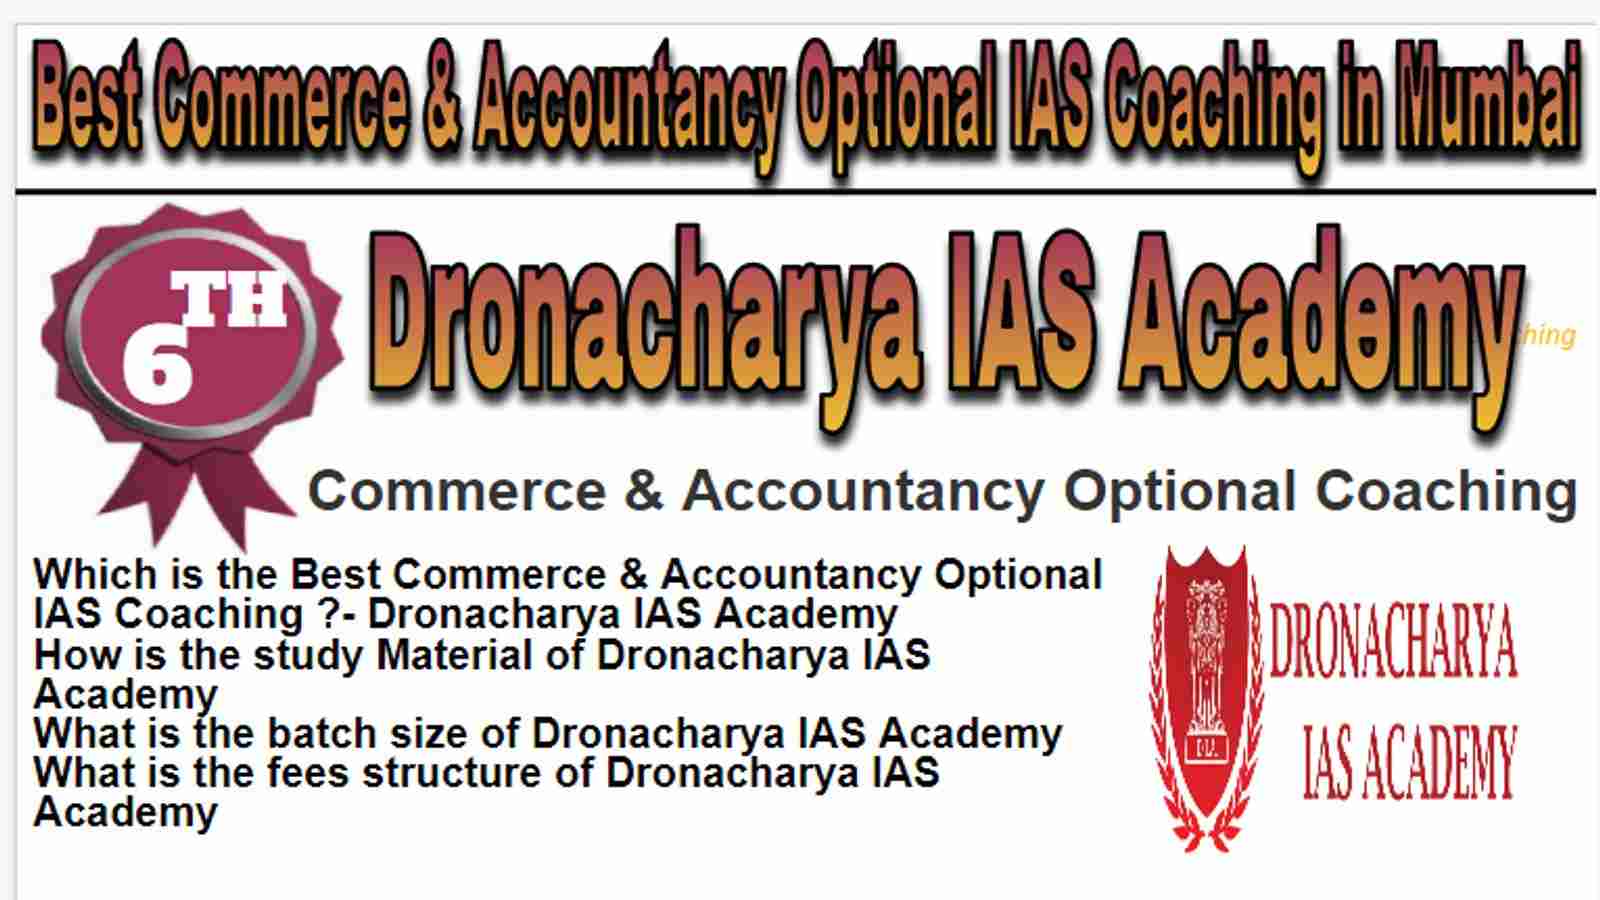 Rank 6 Best Commerce & Accountancy Optional IAS Coaching in Mumbai